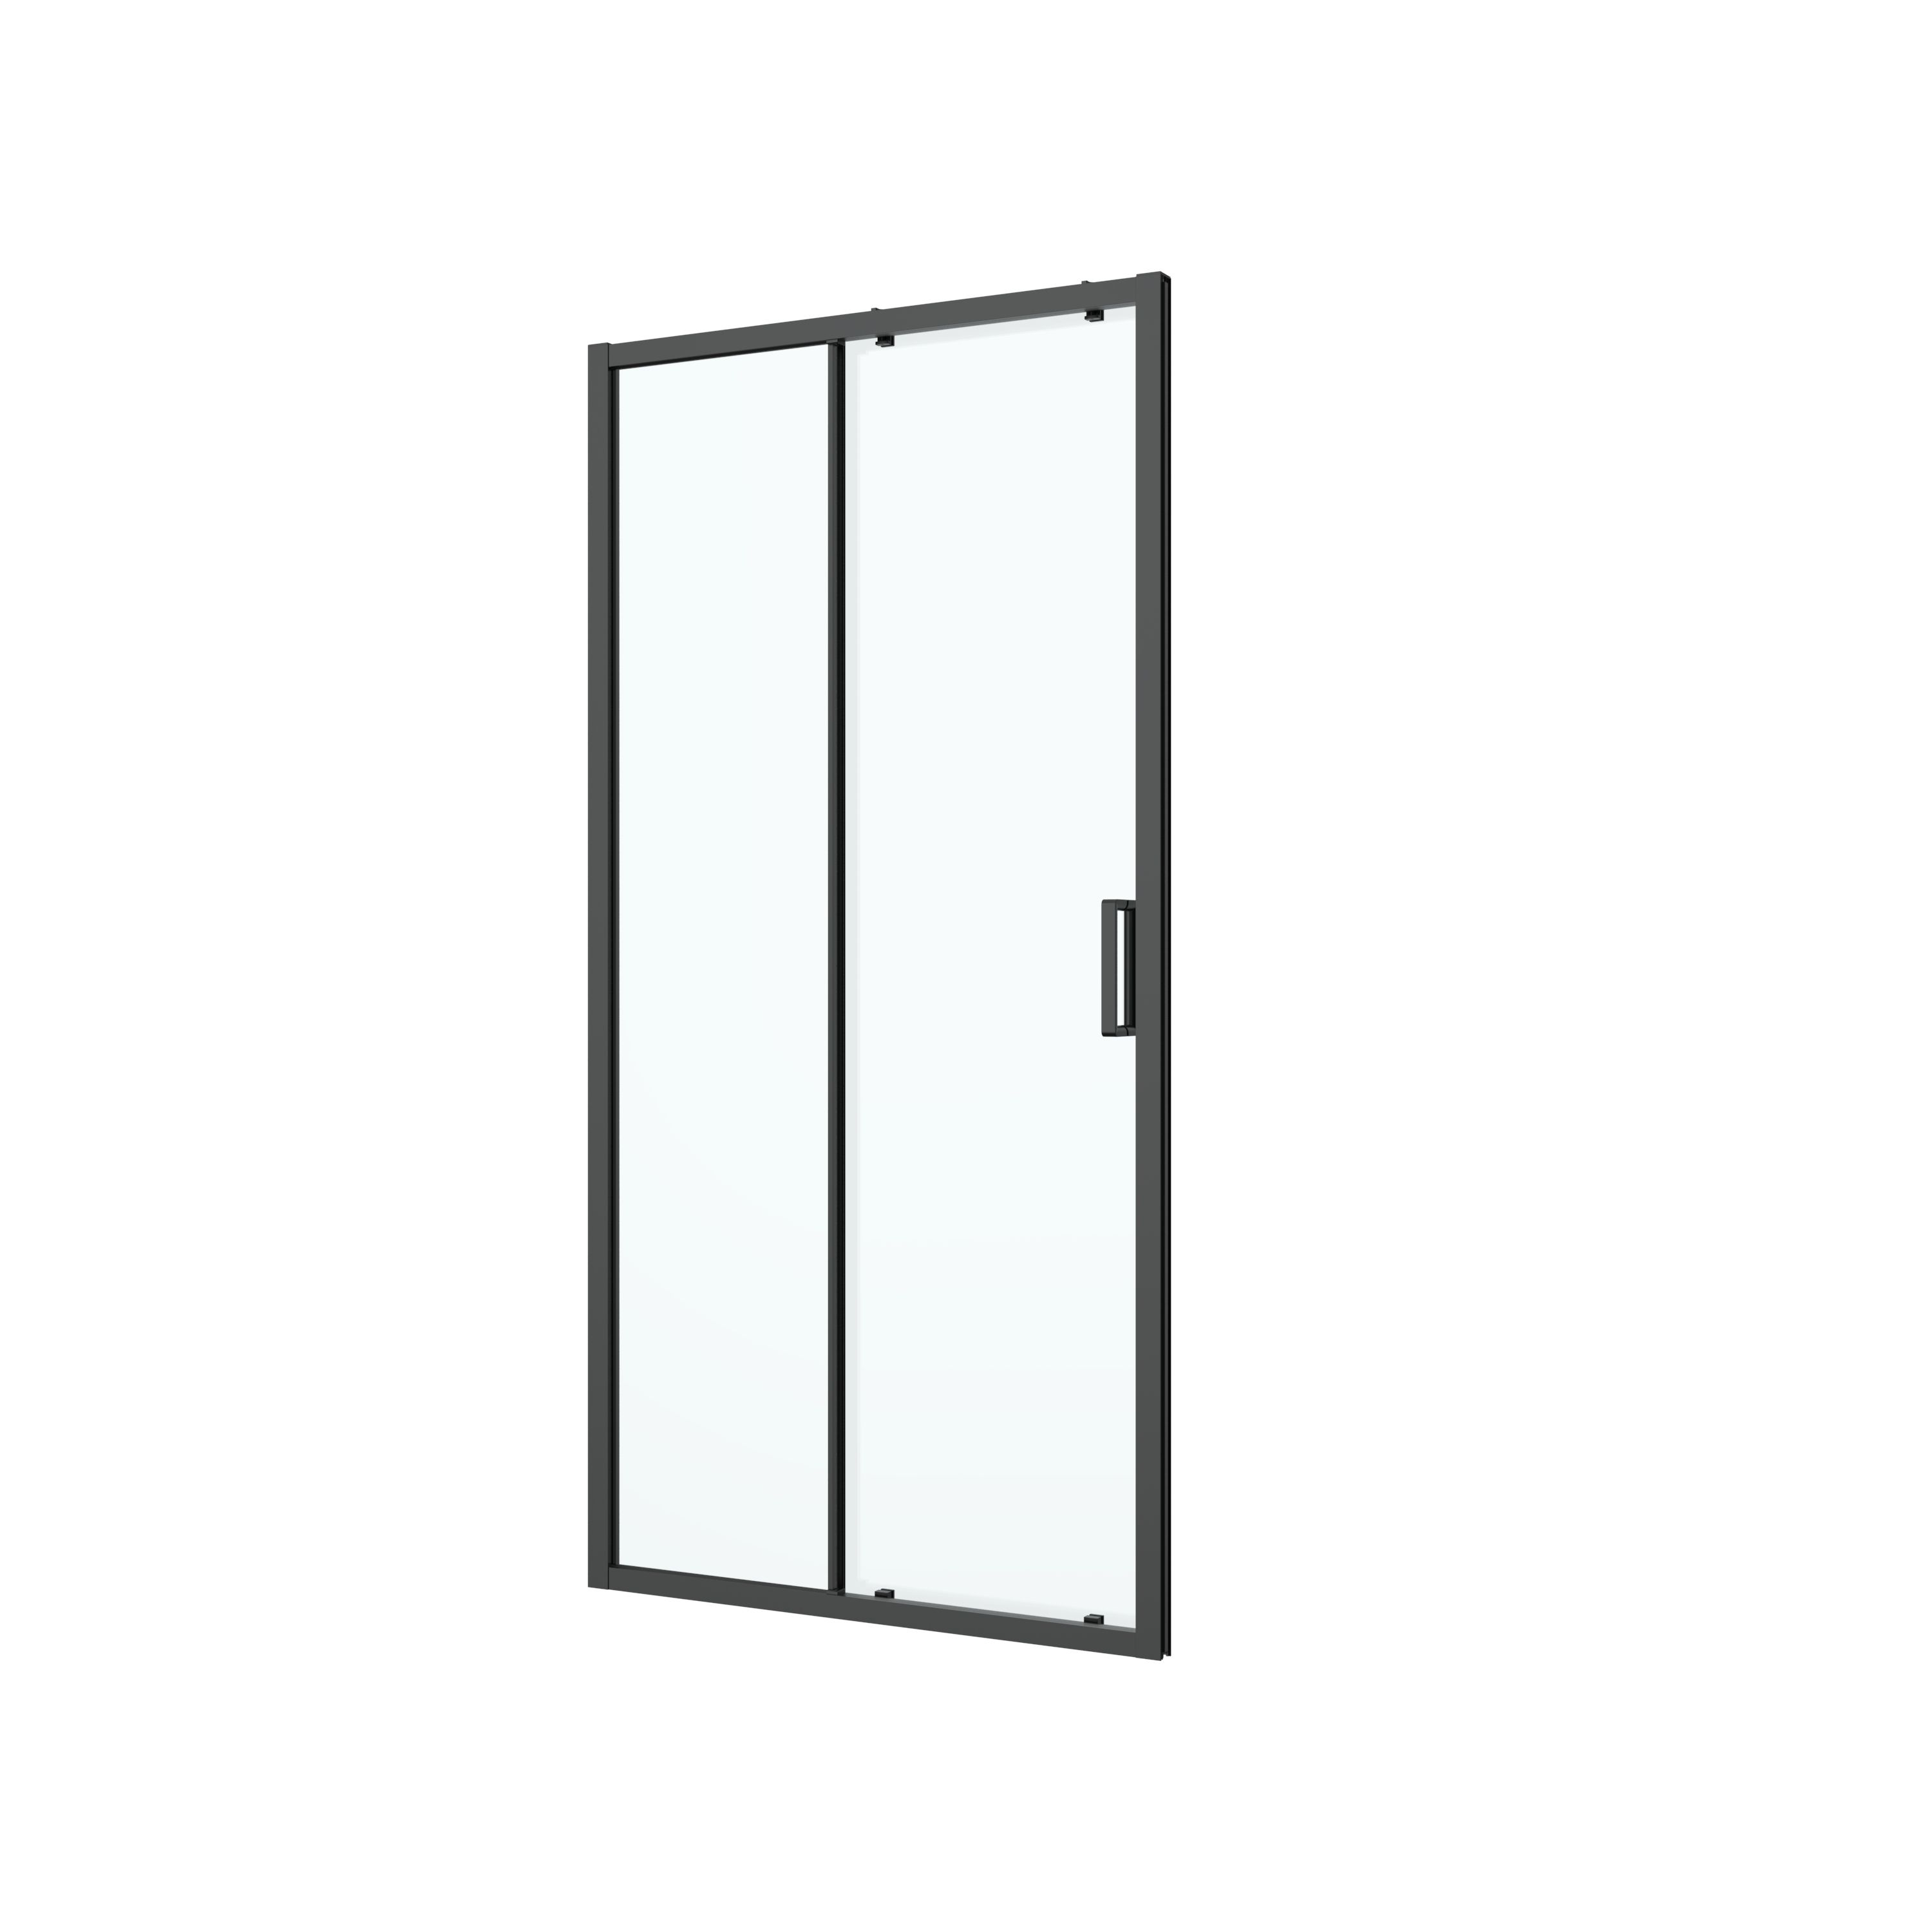 GoodHome Ledava Minimal frame Black Clear glass Sliding Shower Door (H)195cm (W)140cm